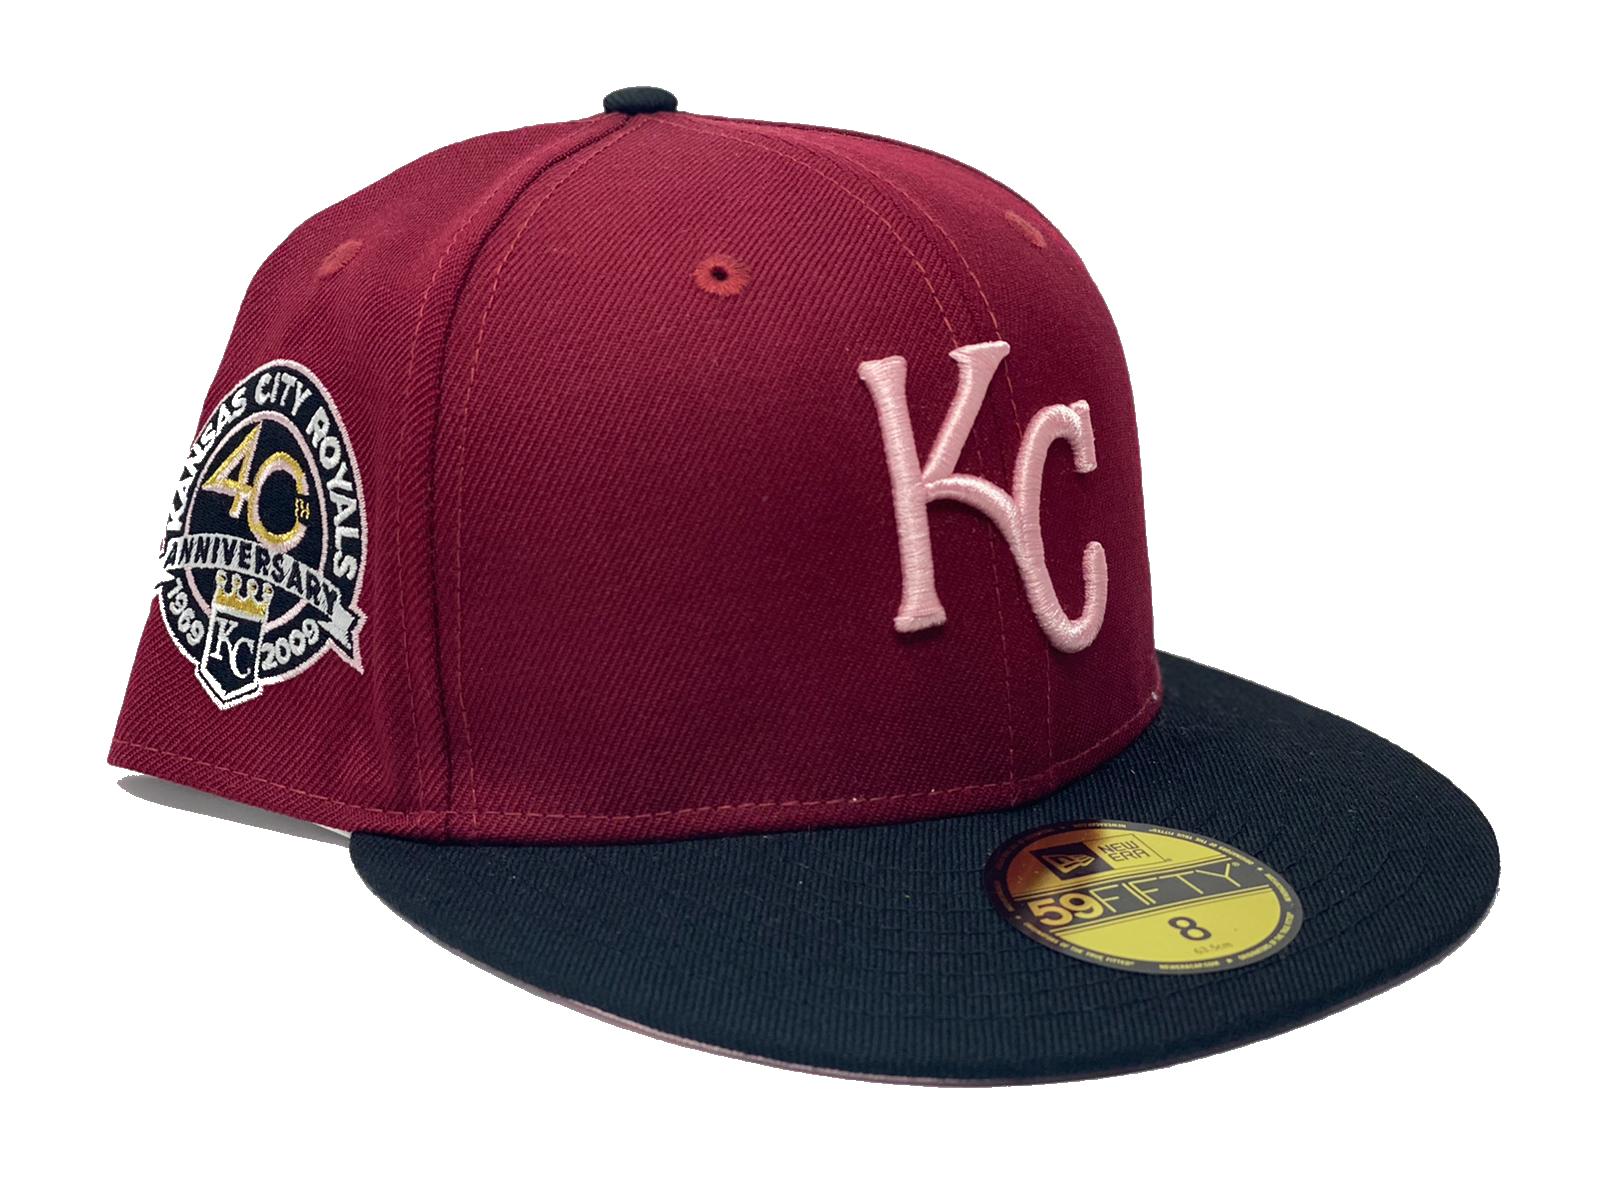 MLB Cotton Kansas City Royals # 6641-B